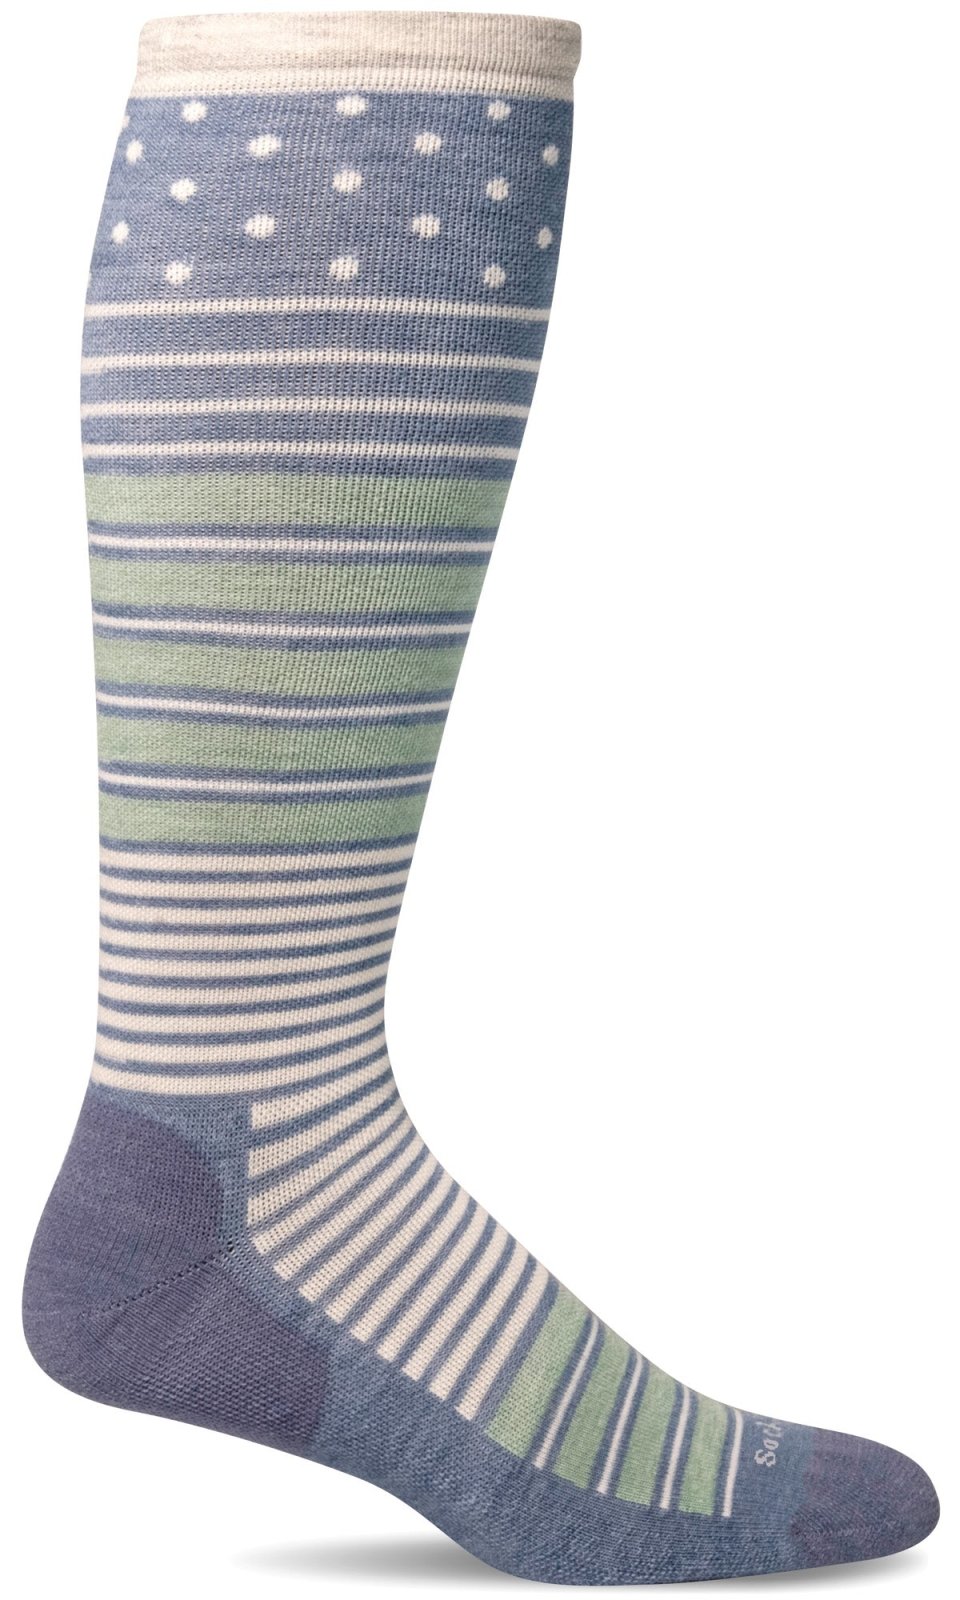 NOVAYARD Compression Socks for Women and Men Support Graduated 15